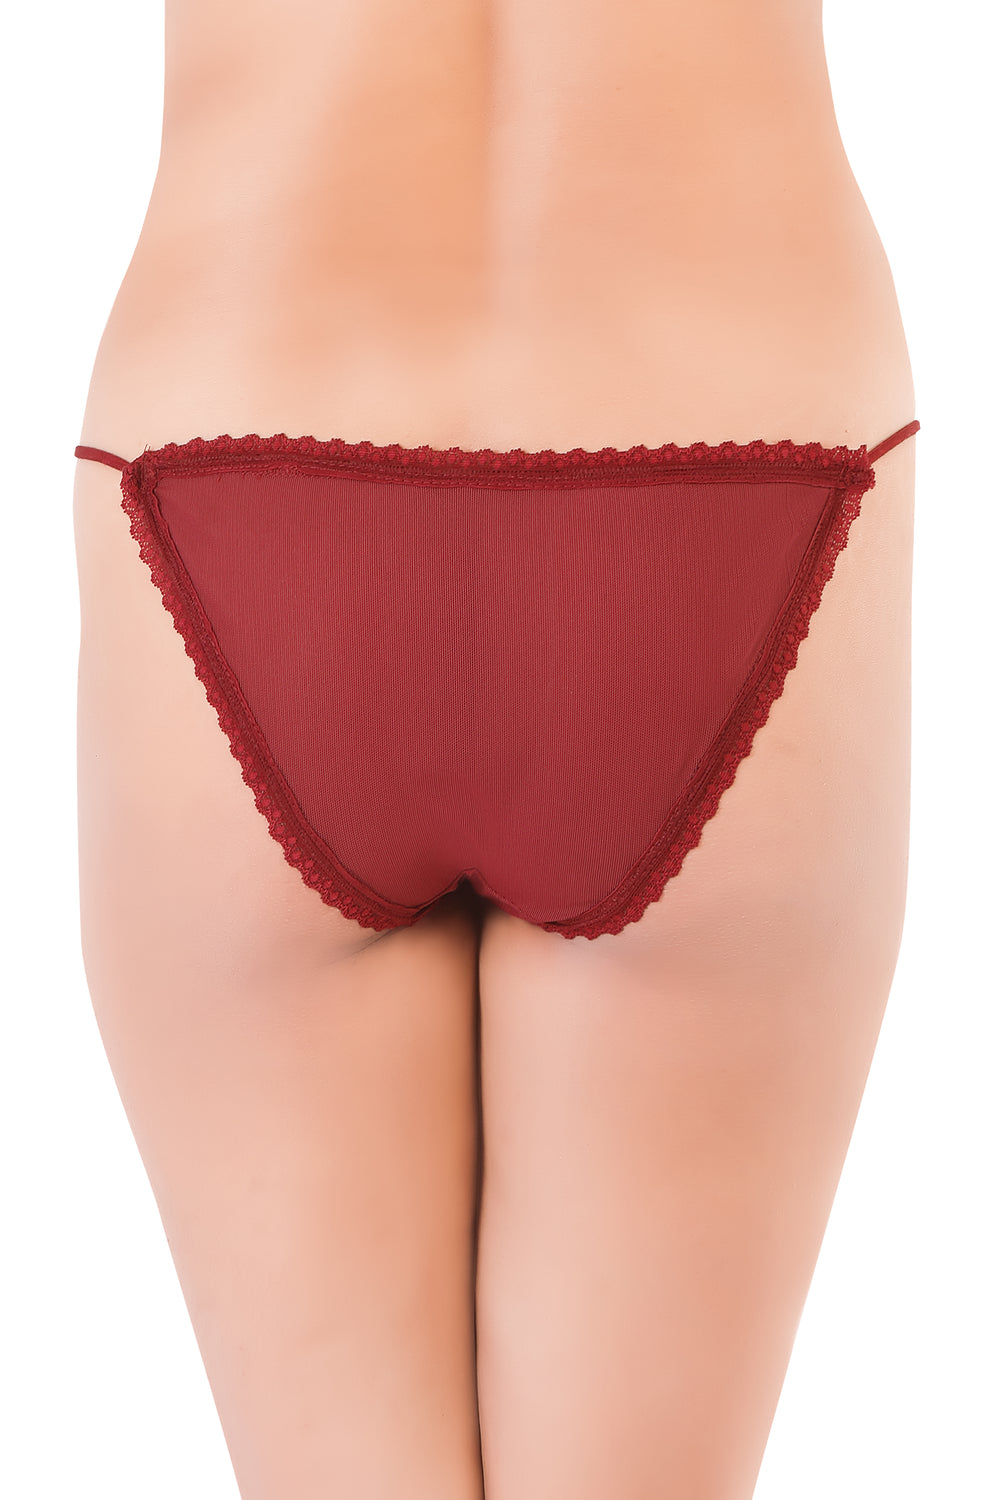 Generic Women's Nylon Sleek String Red Bikini Panty (Red)